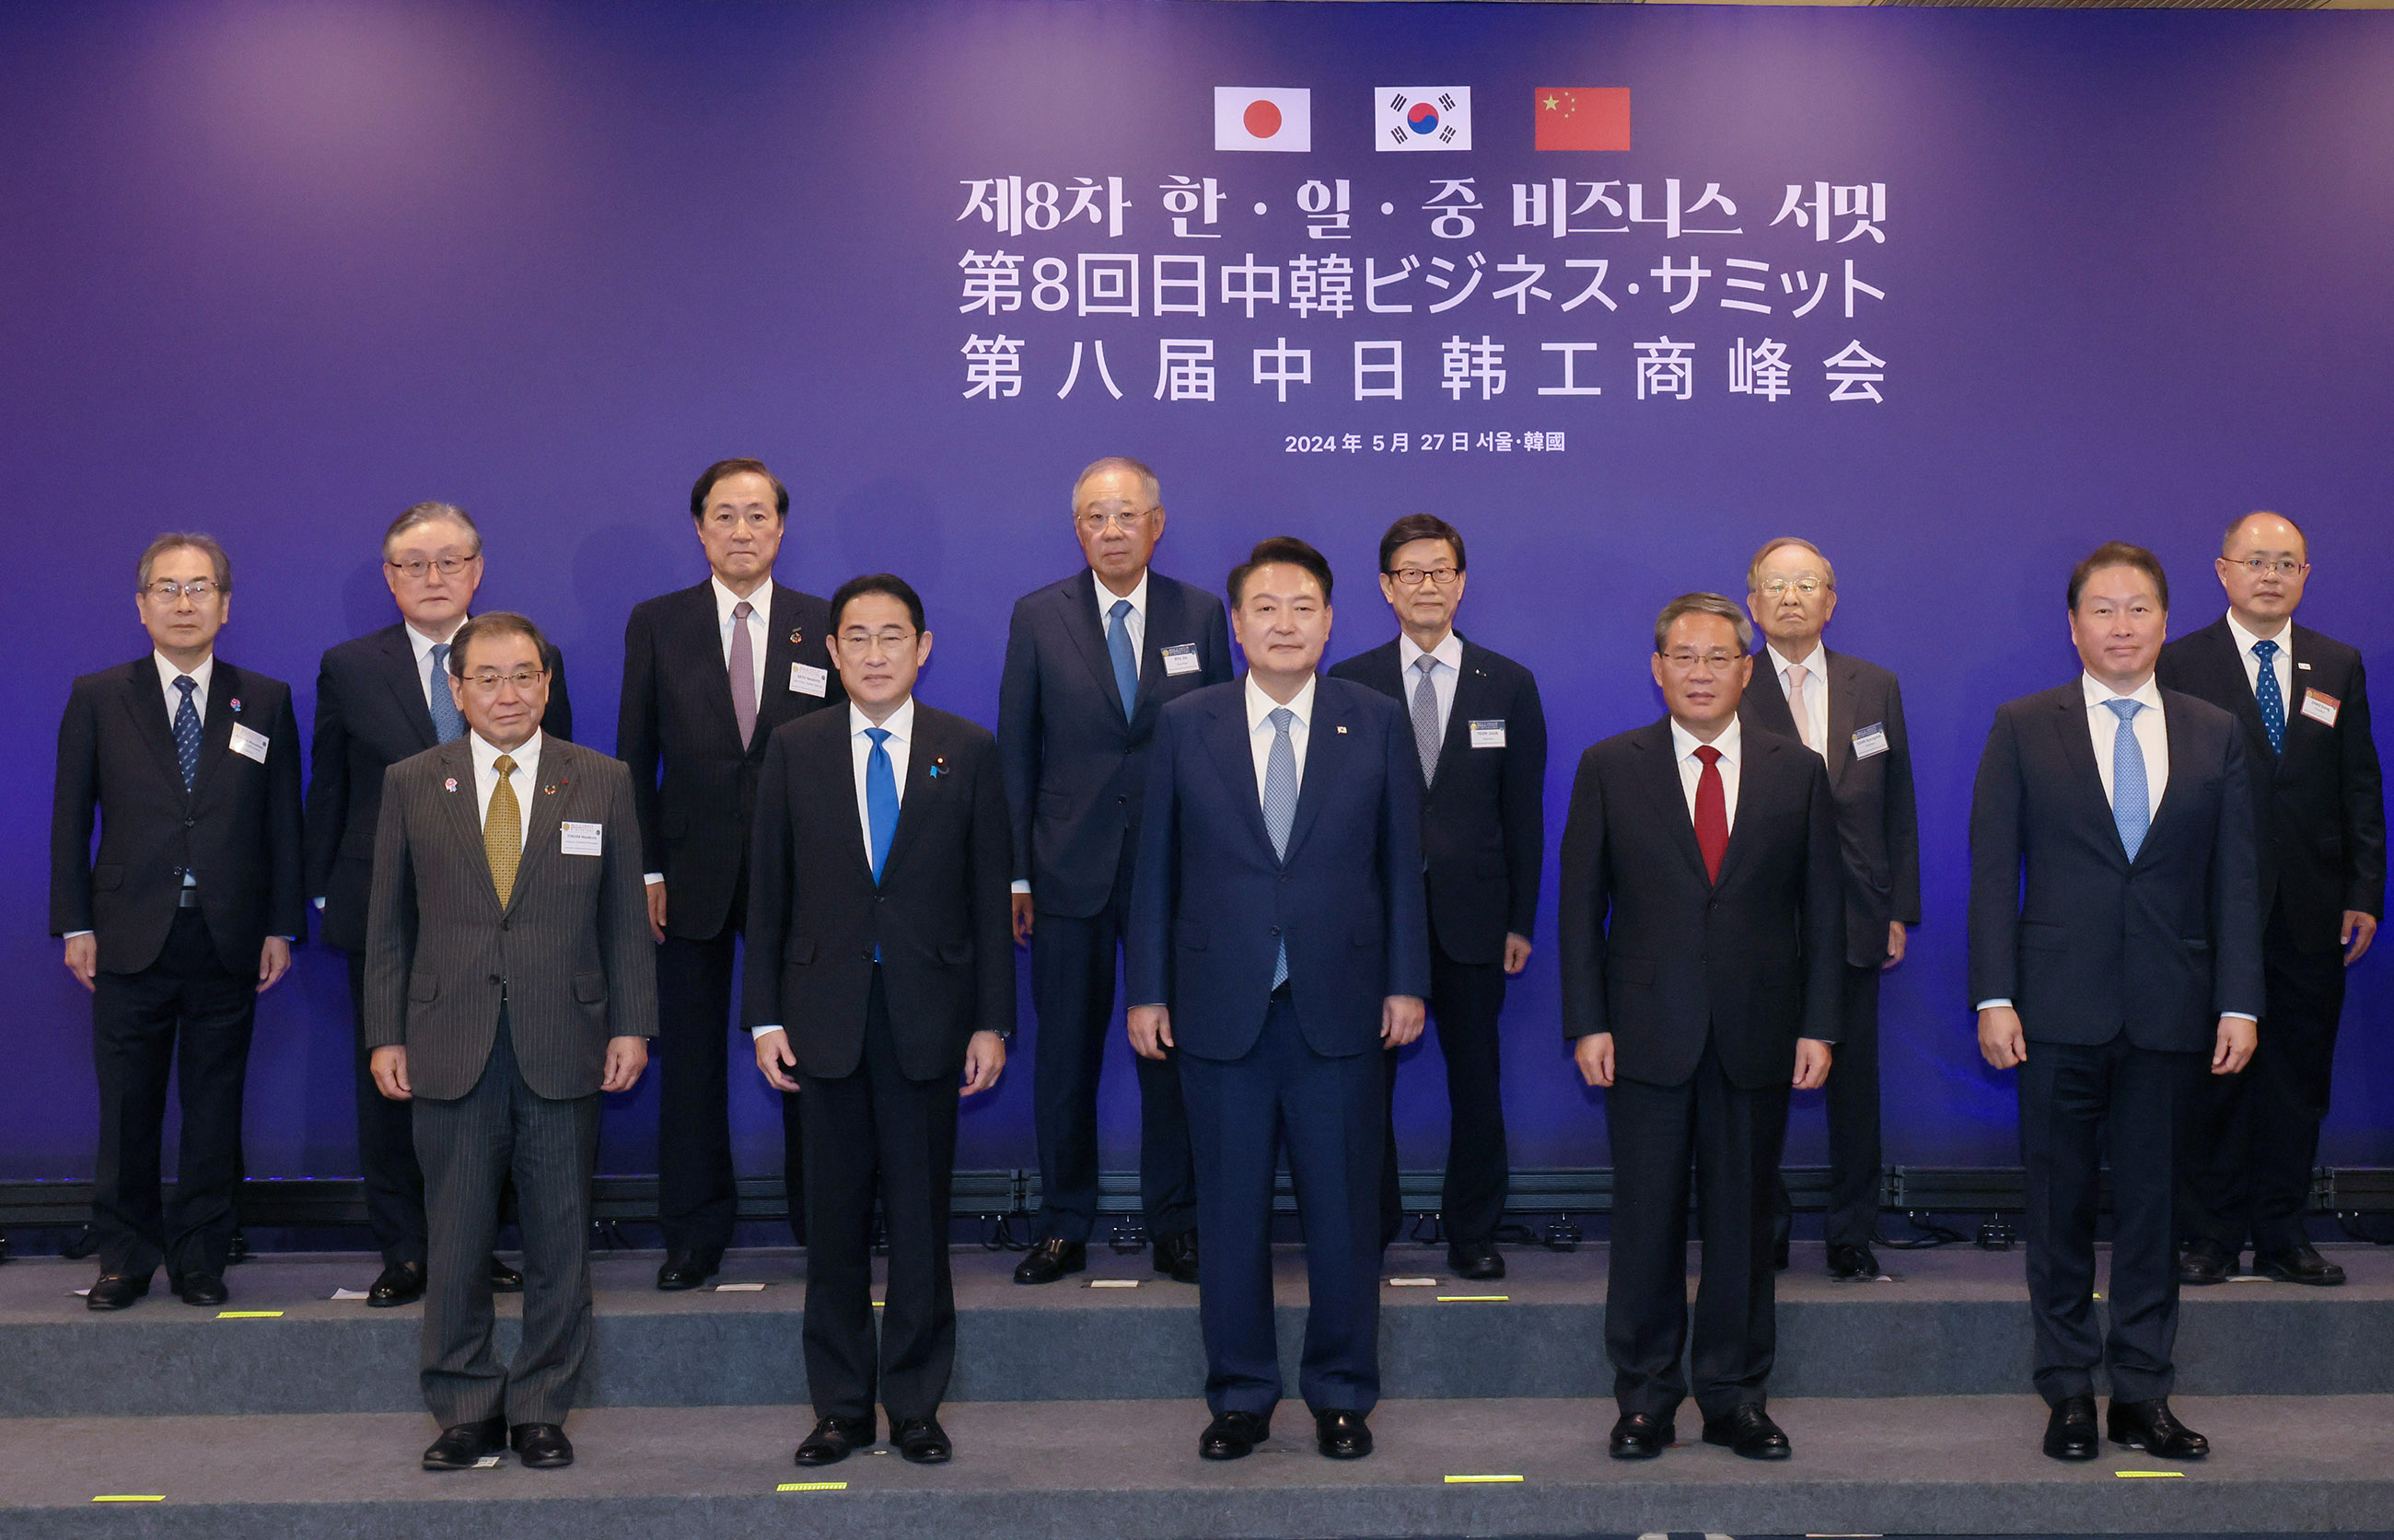 Prime Minister Kishida attending the Japan-China-ROK Business Summit (1)